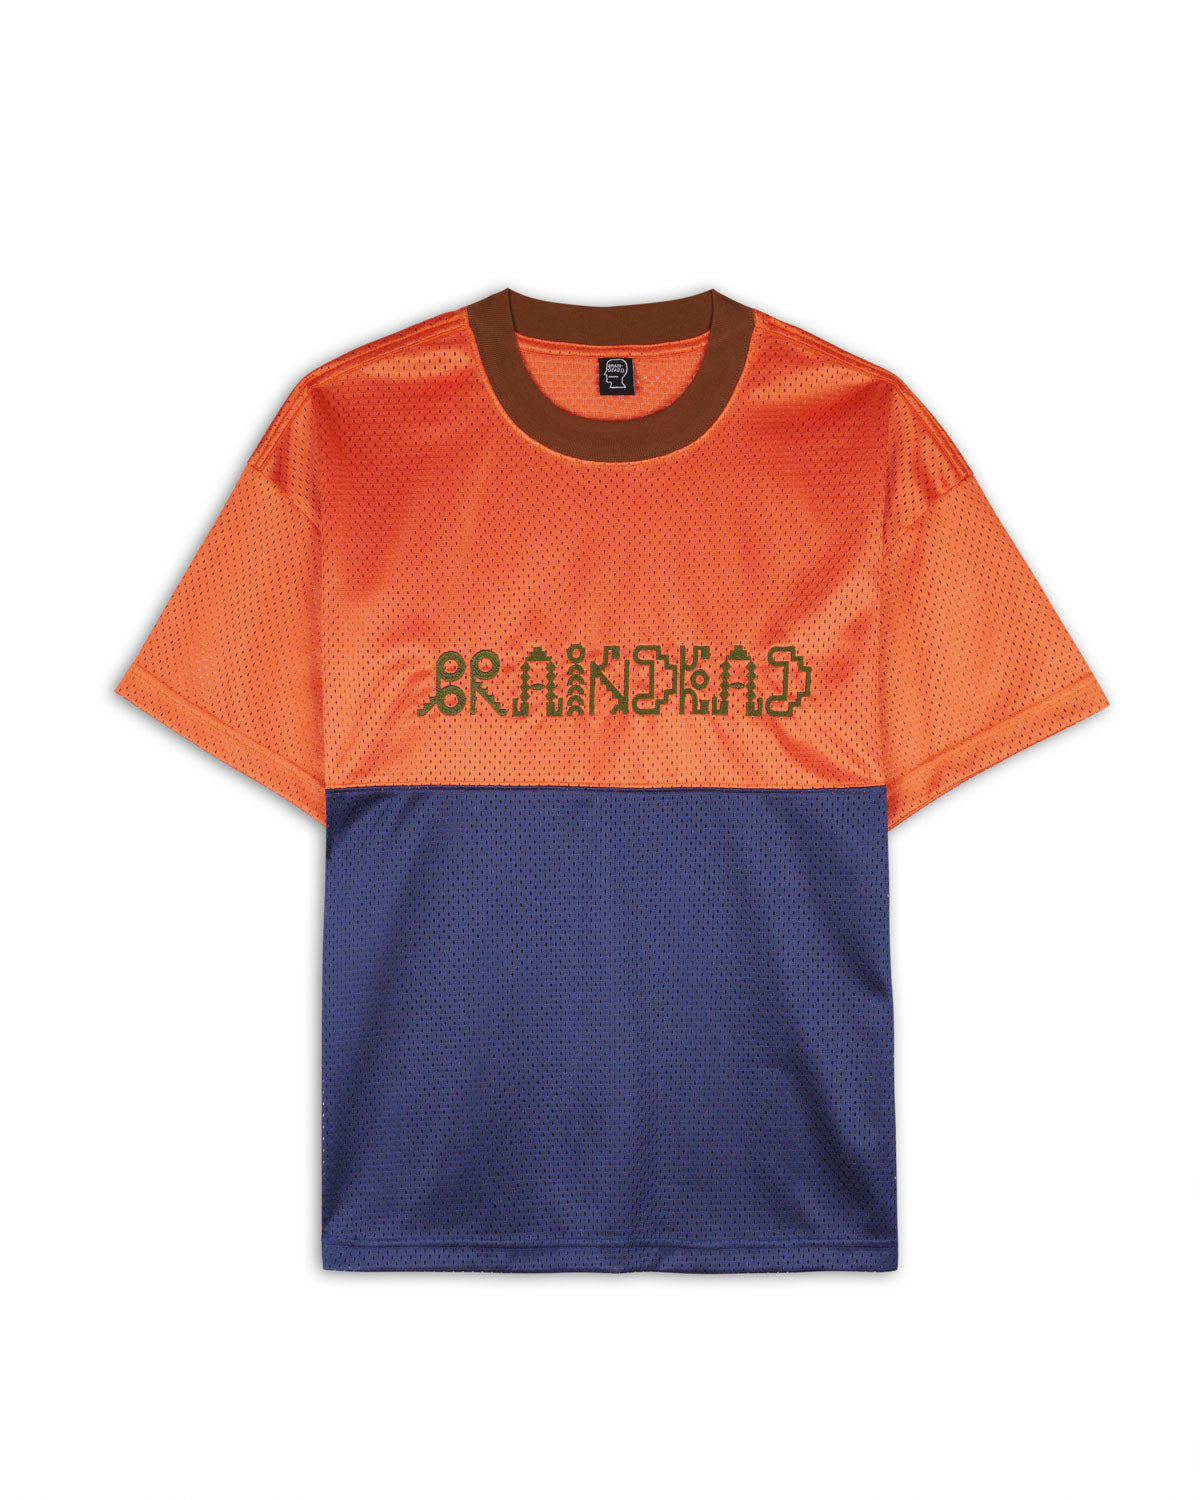 Maze Football Mesh Shirt - Orange/Navy 1